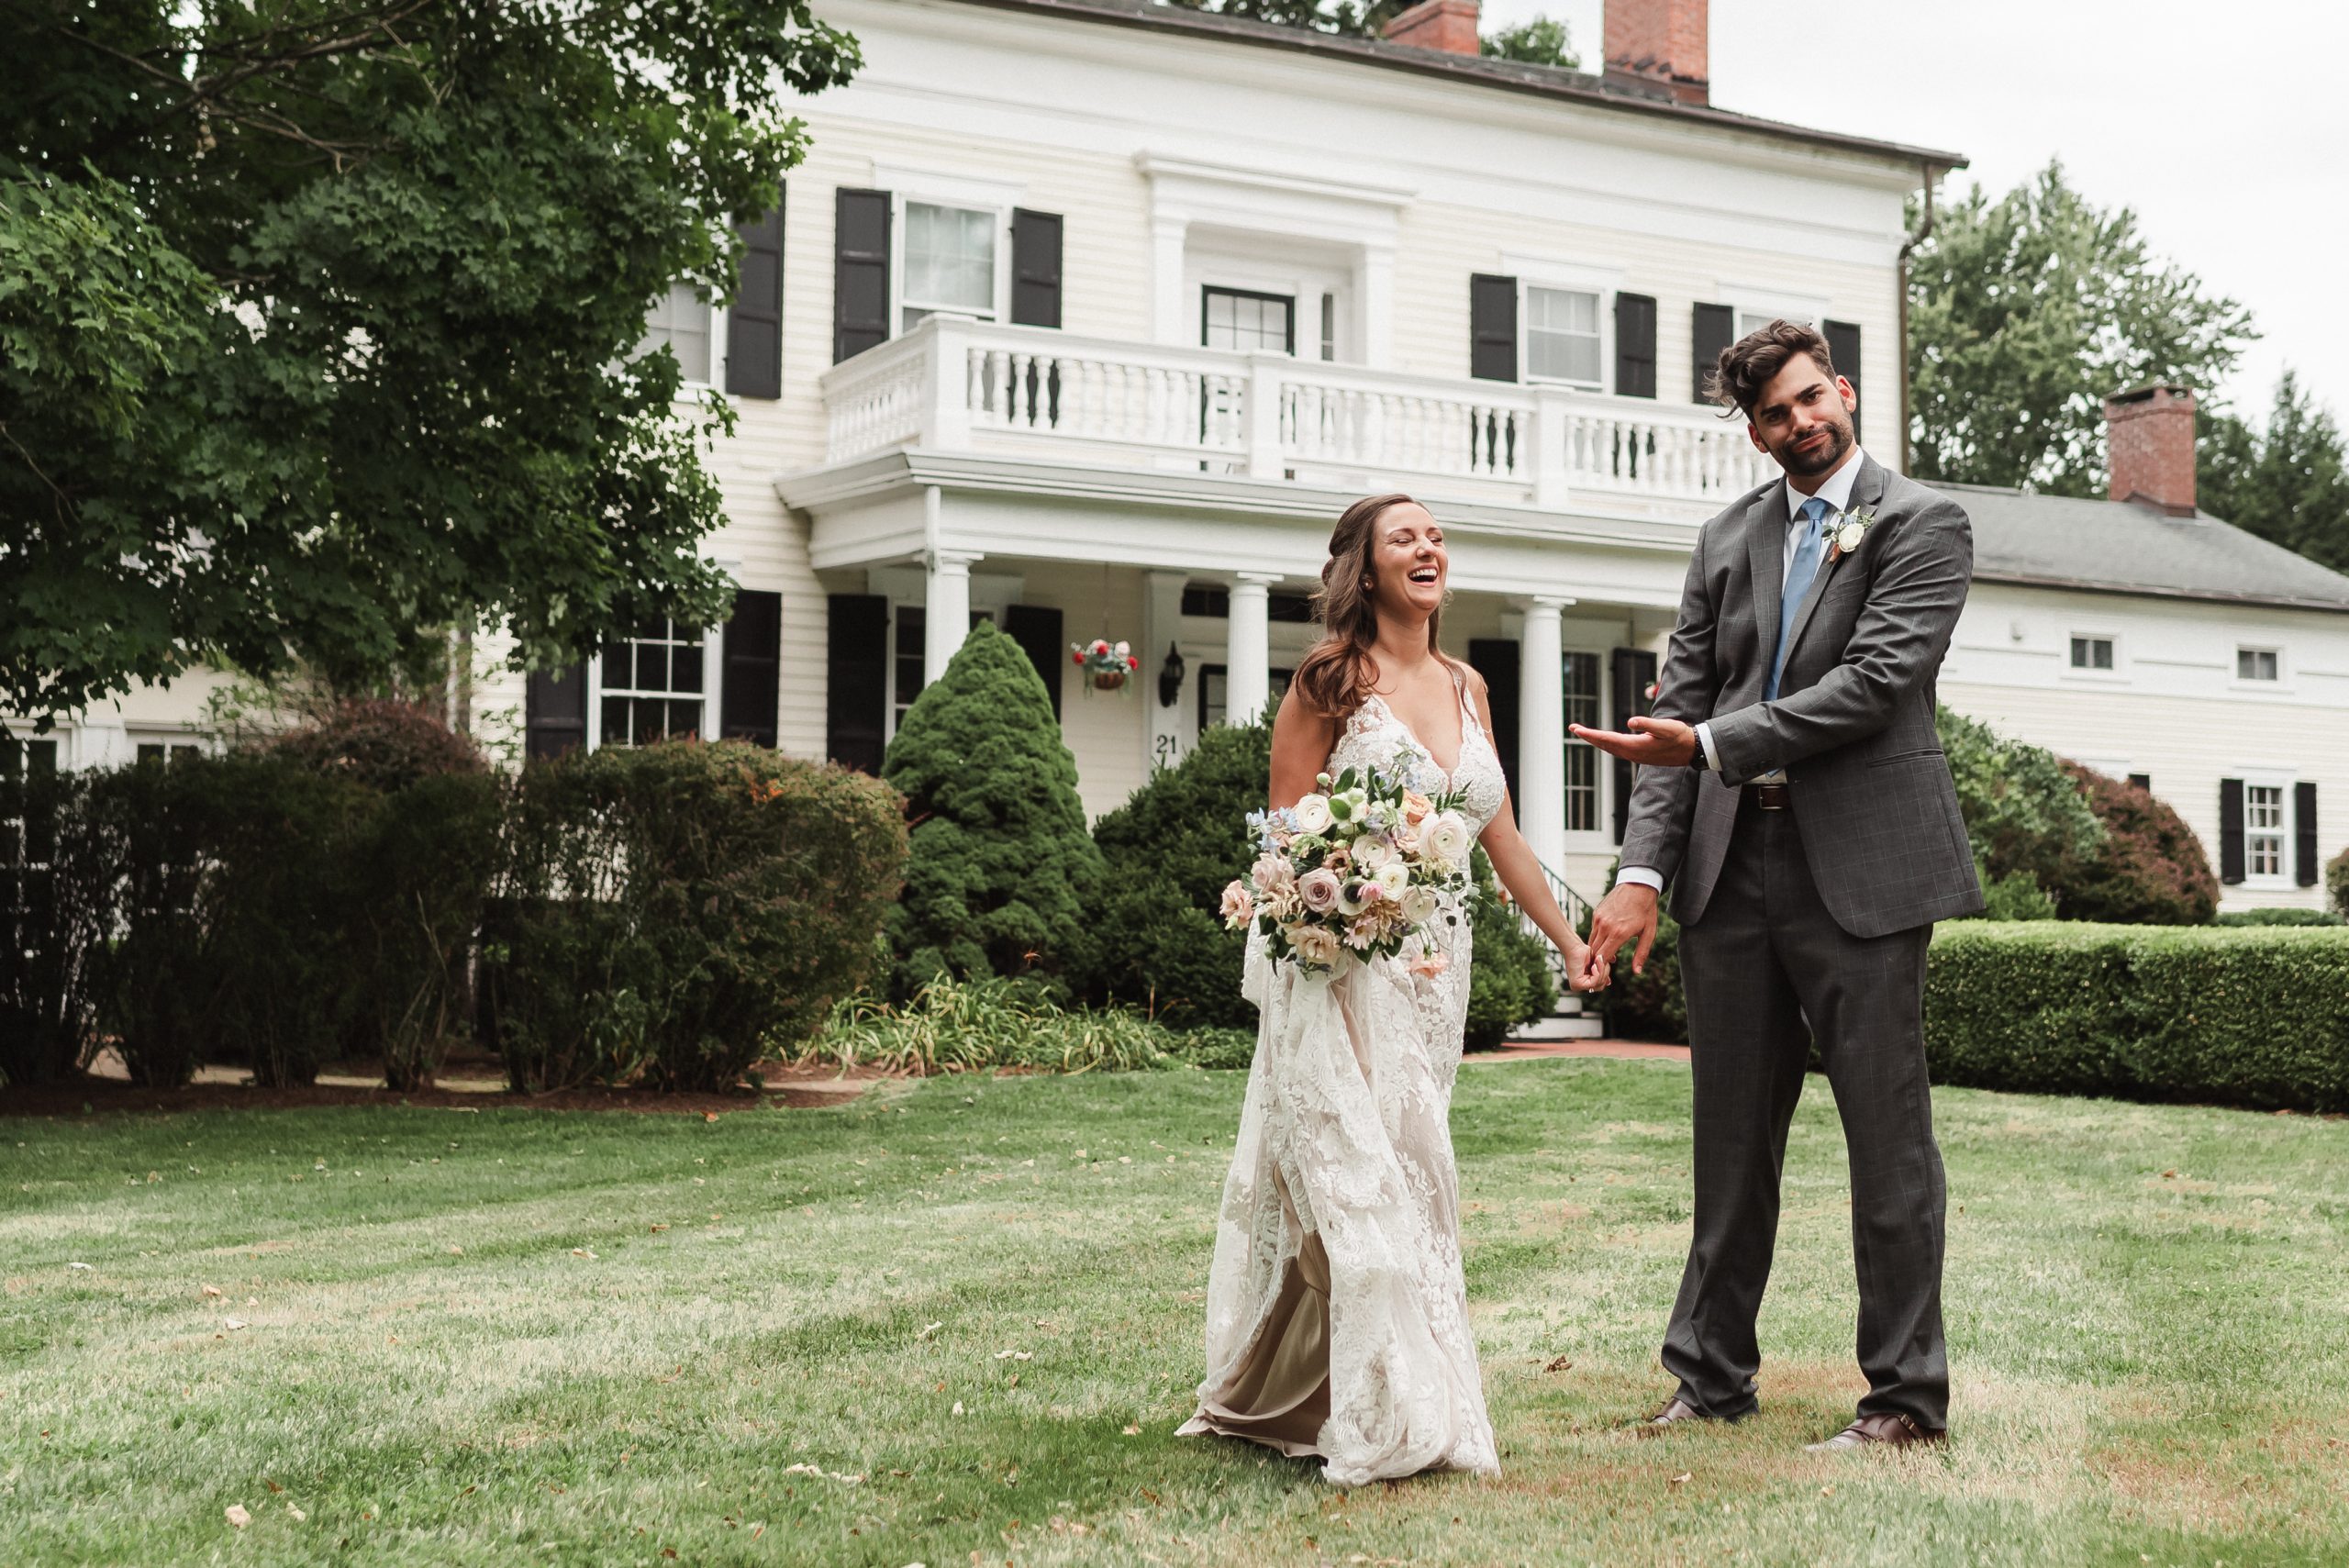 bykenhulle-house-wedding-photos-portraits-by-suessmoments-nyc-photographer